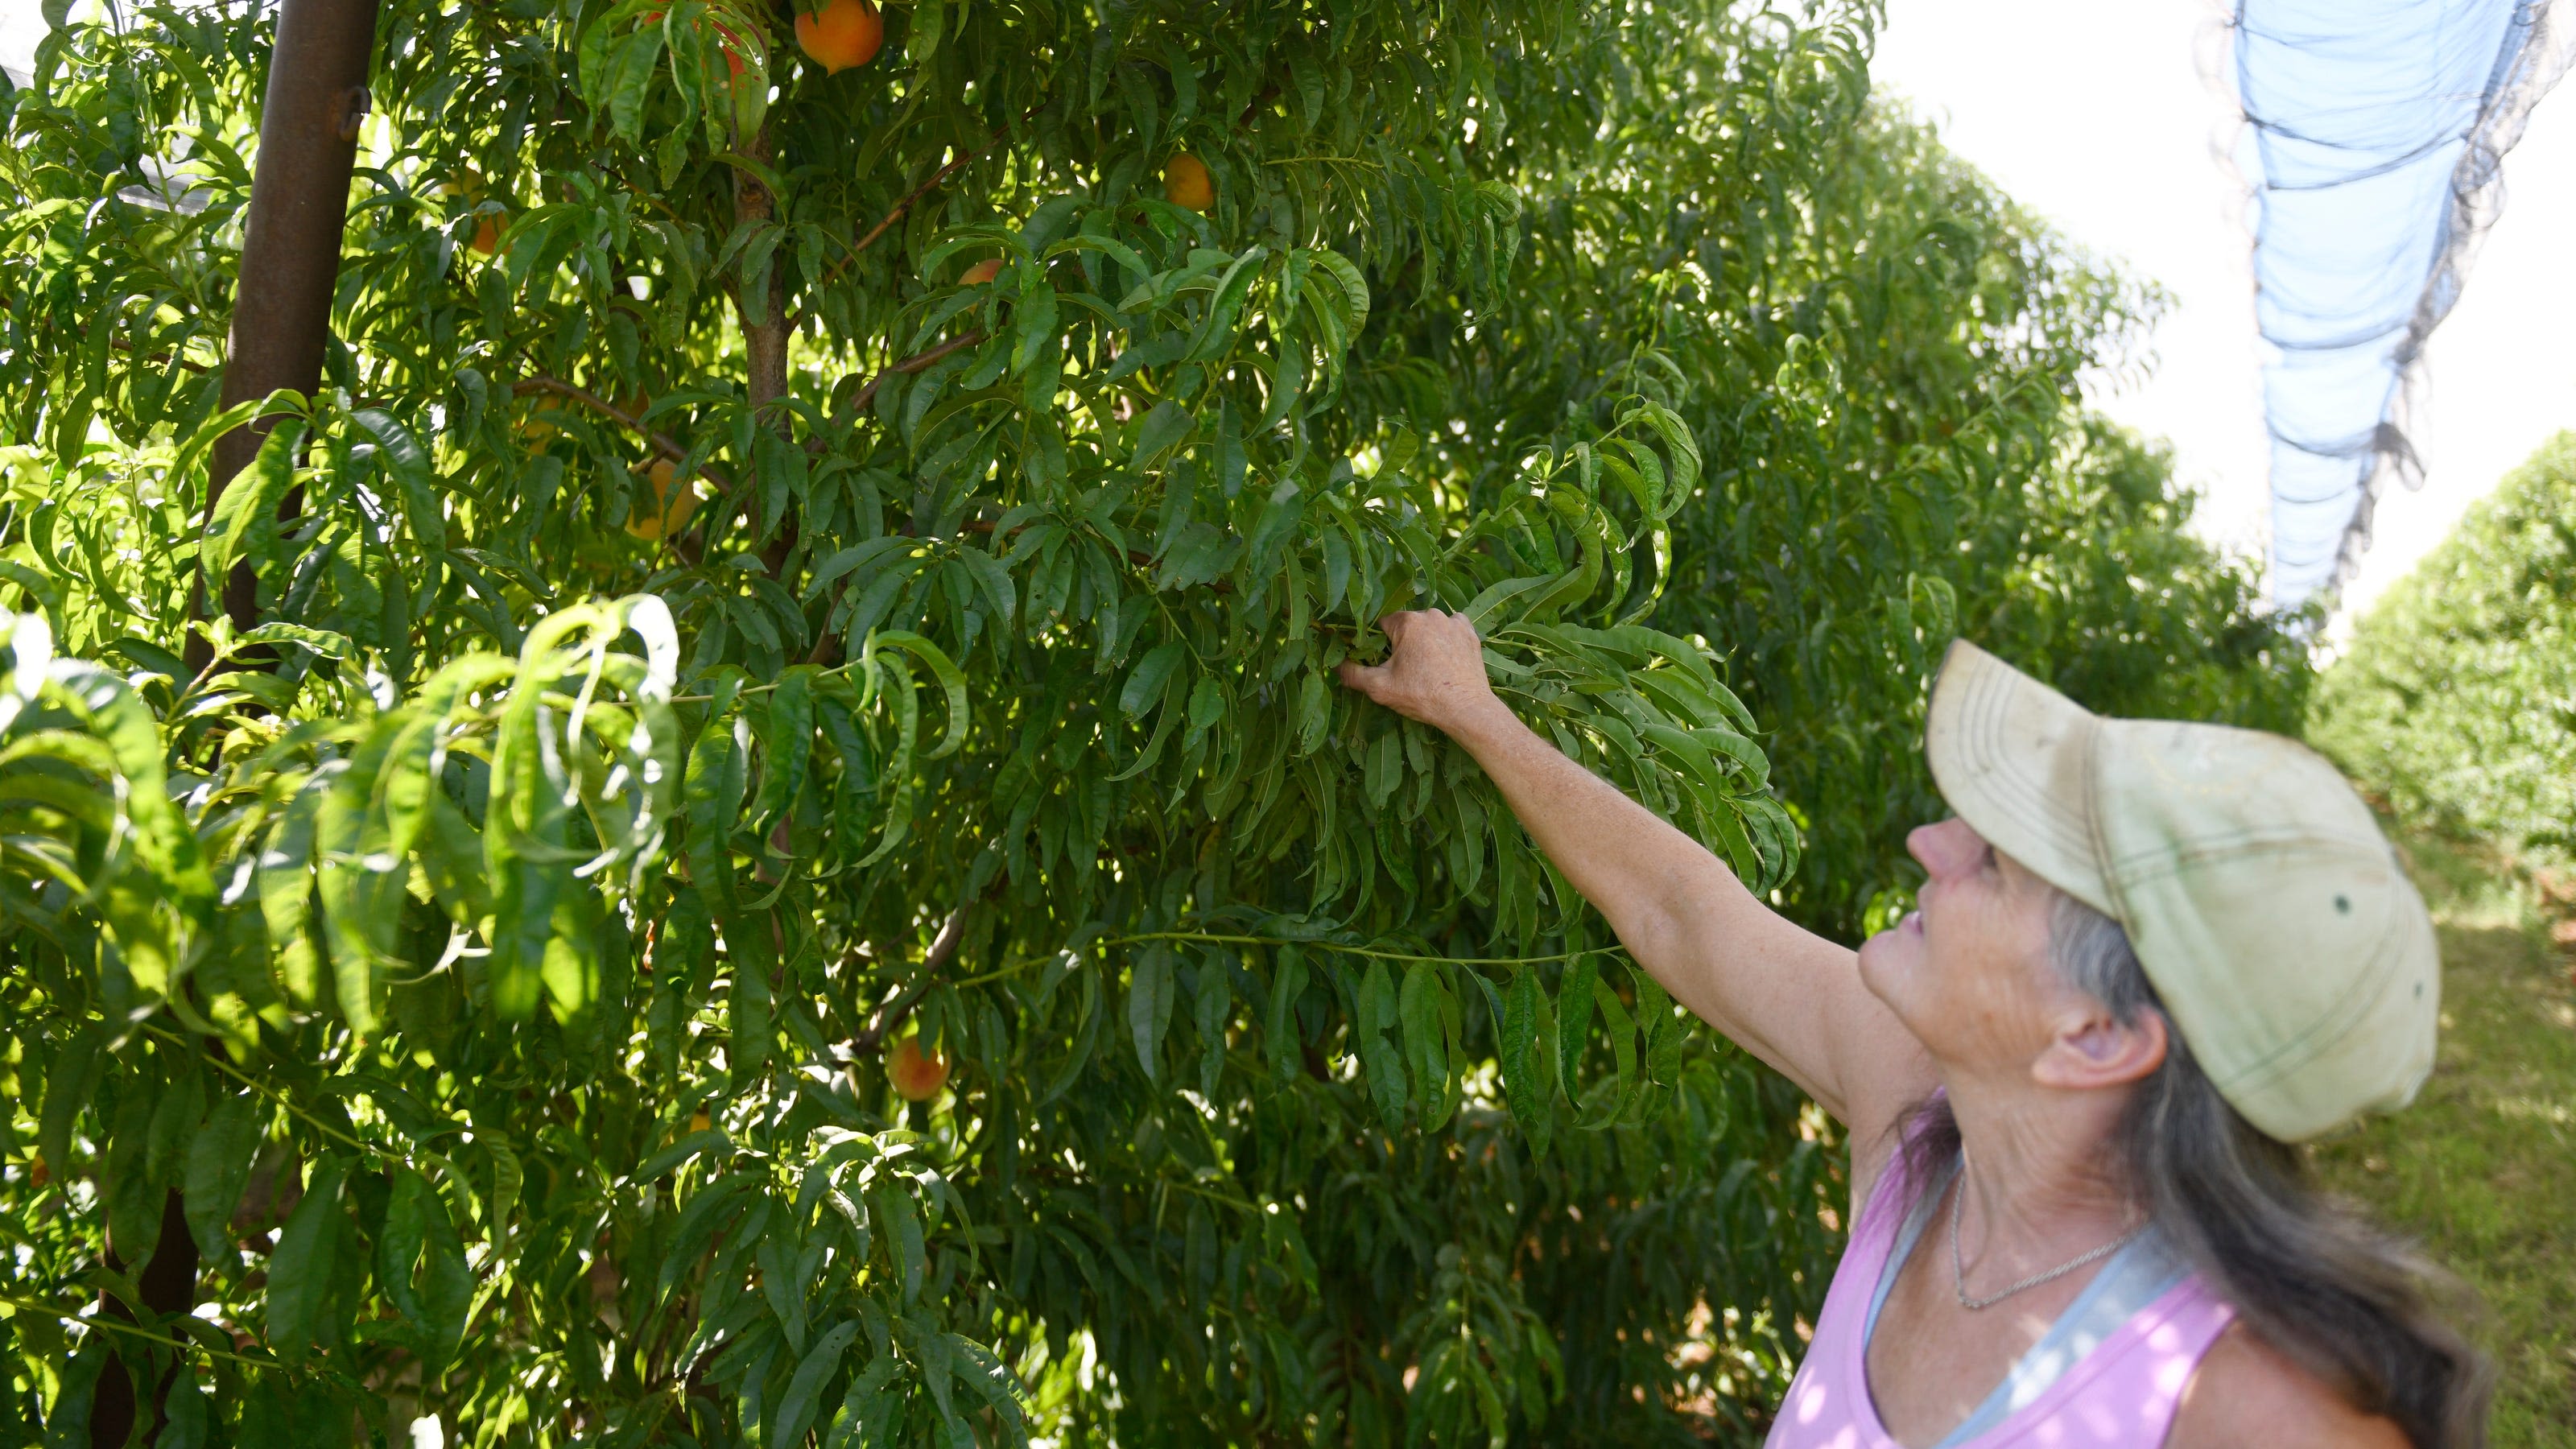 Idalou Harvest Company grower details peaches, veggies, more